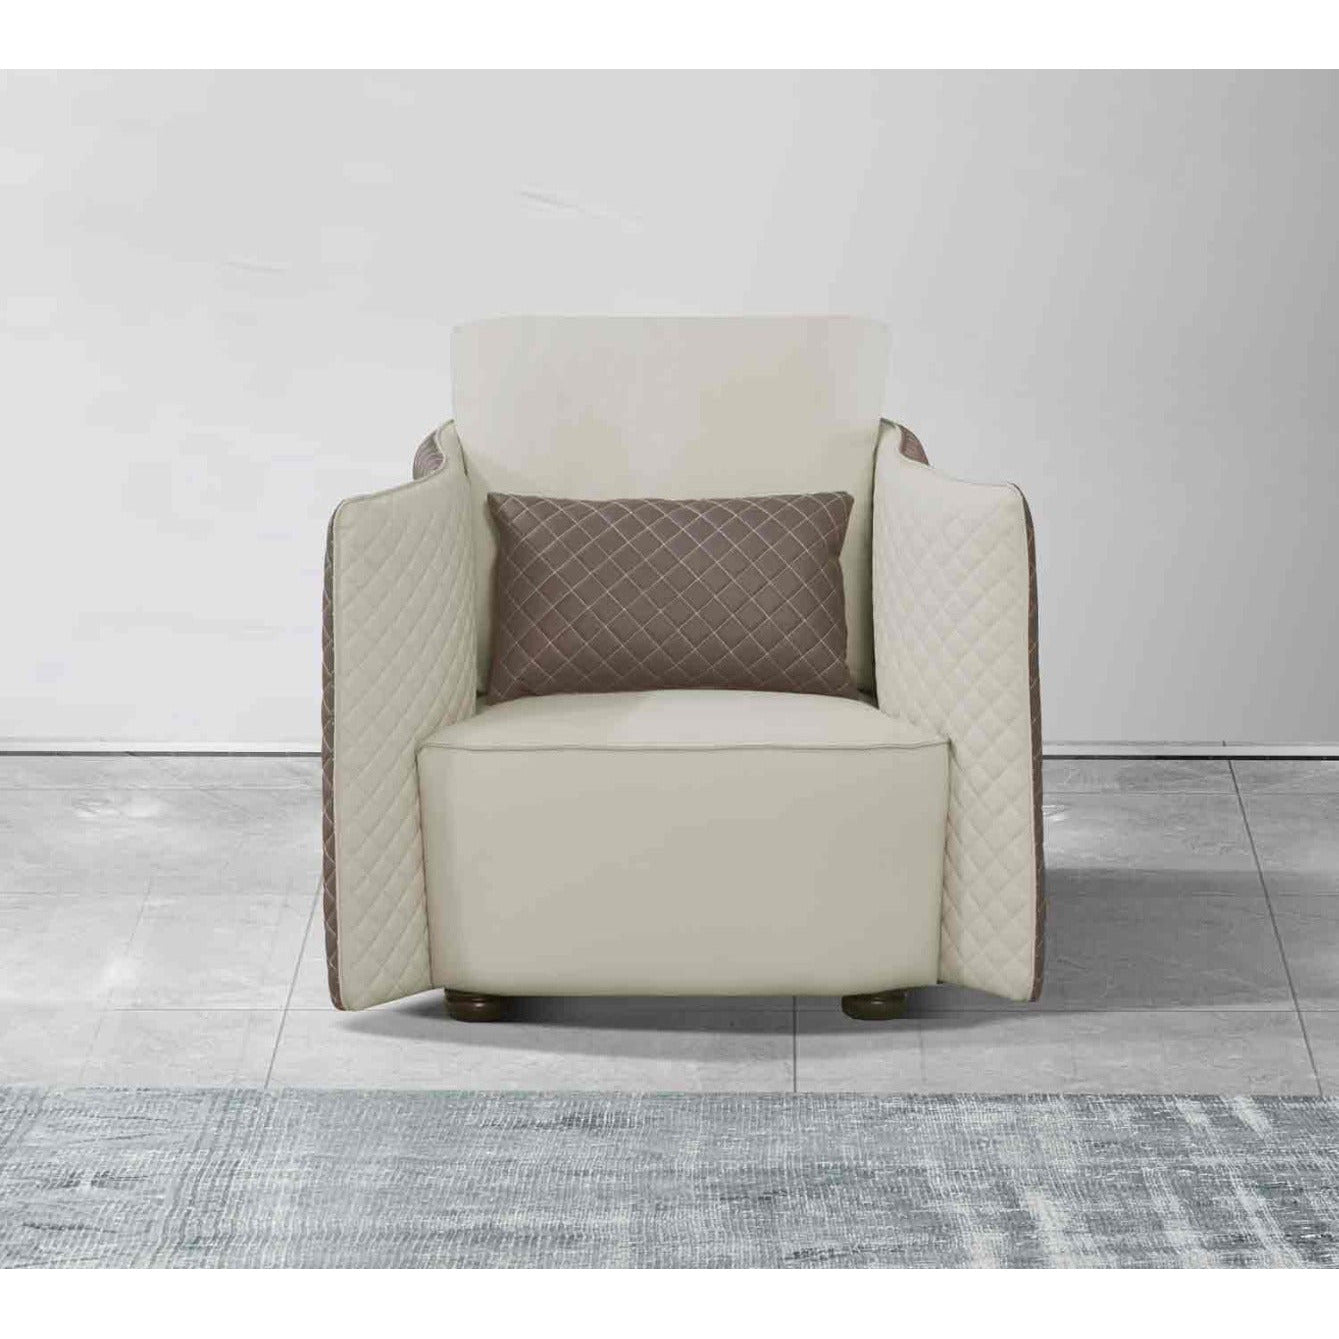 European Furniture - Makassar 3 Piece Living Room Set in Grey & Taupe - 52550-3SET - New Star Living